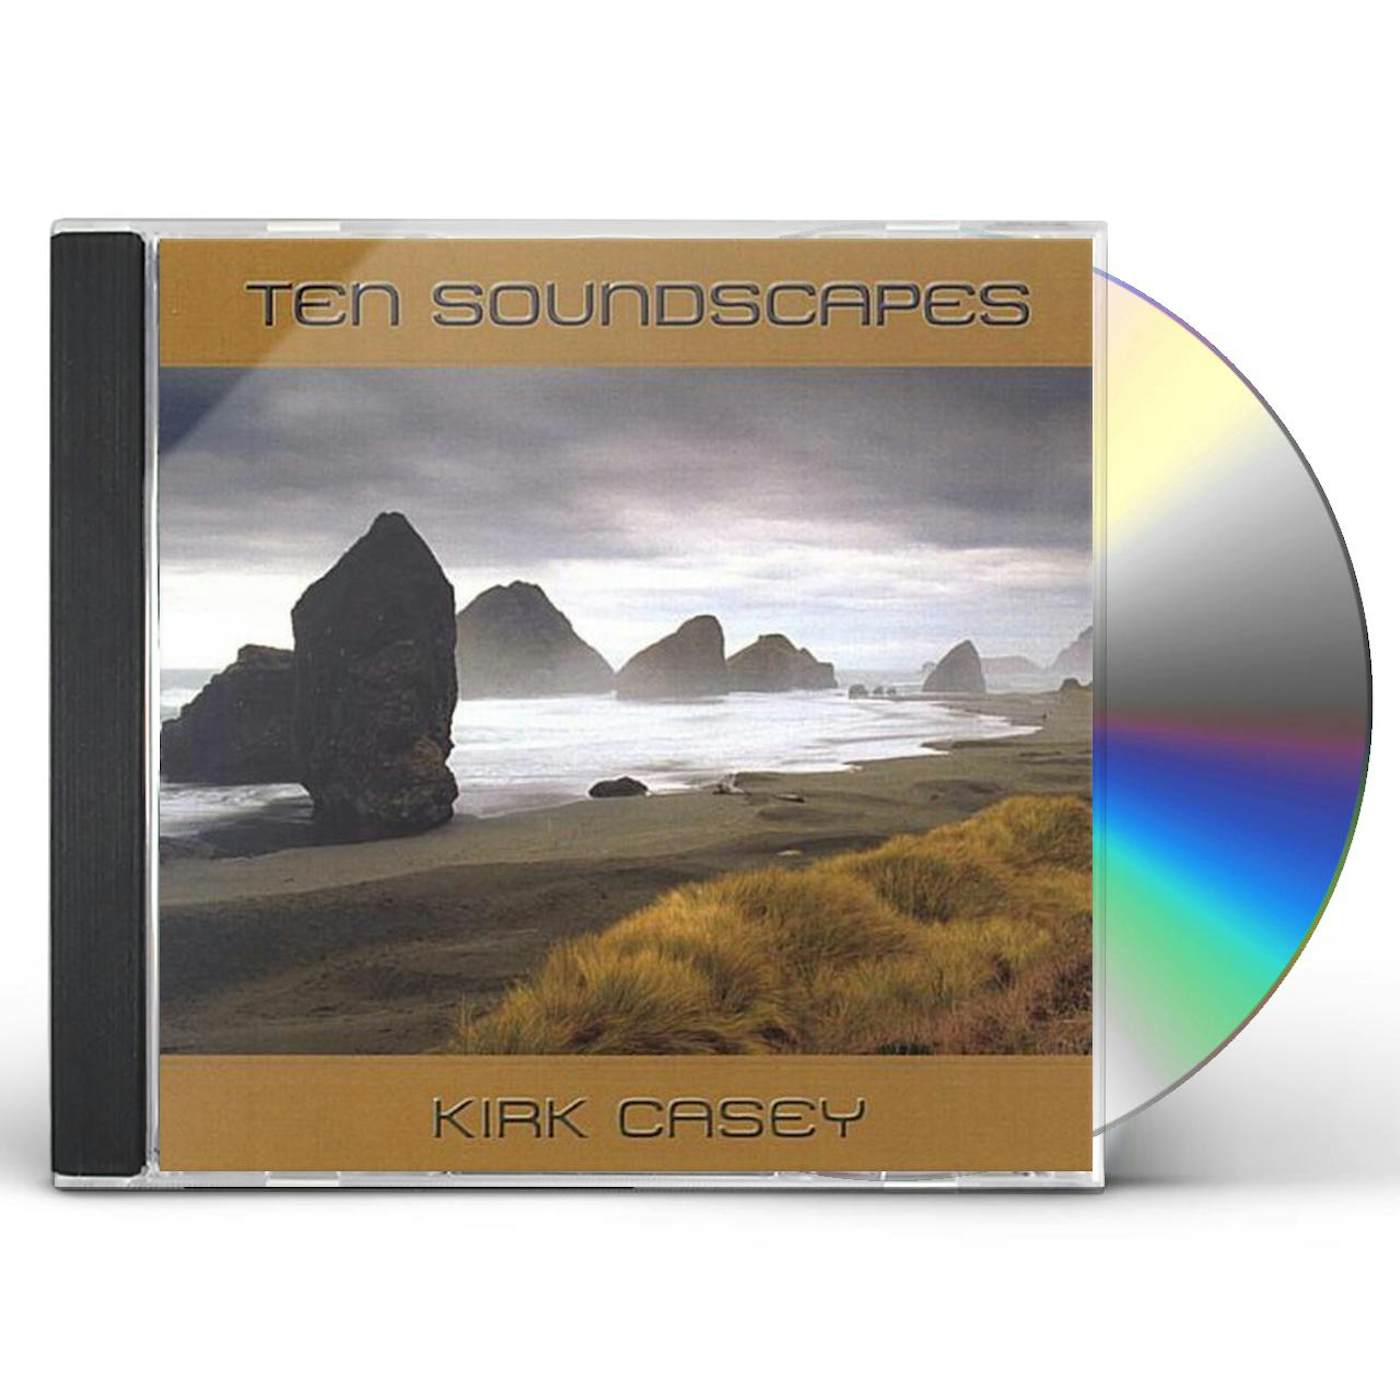 Kirk Casey TEN SOUNDSCAPES CD